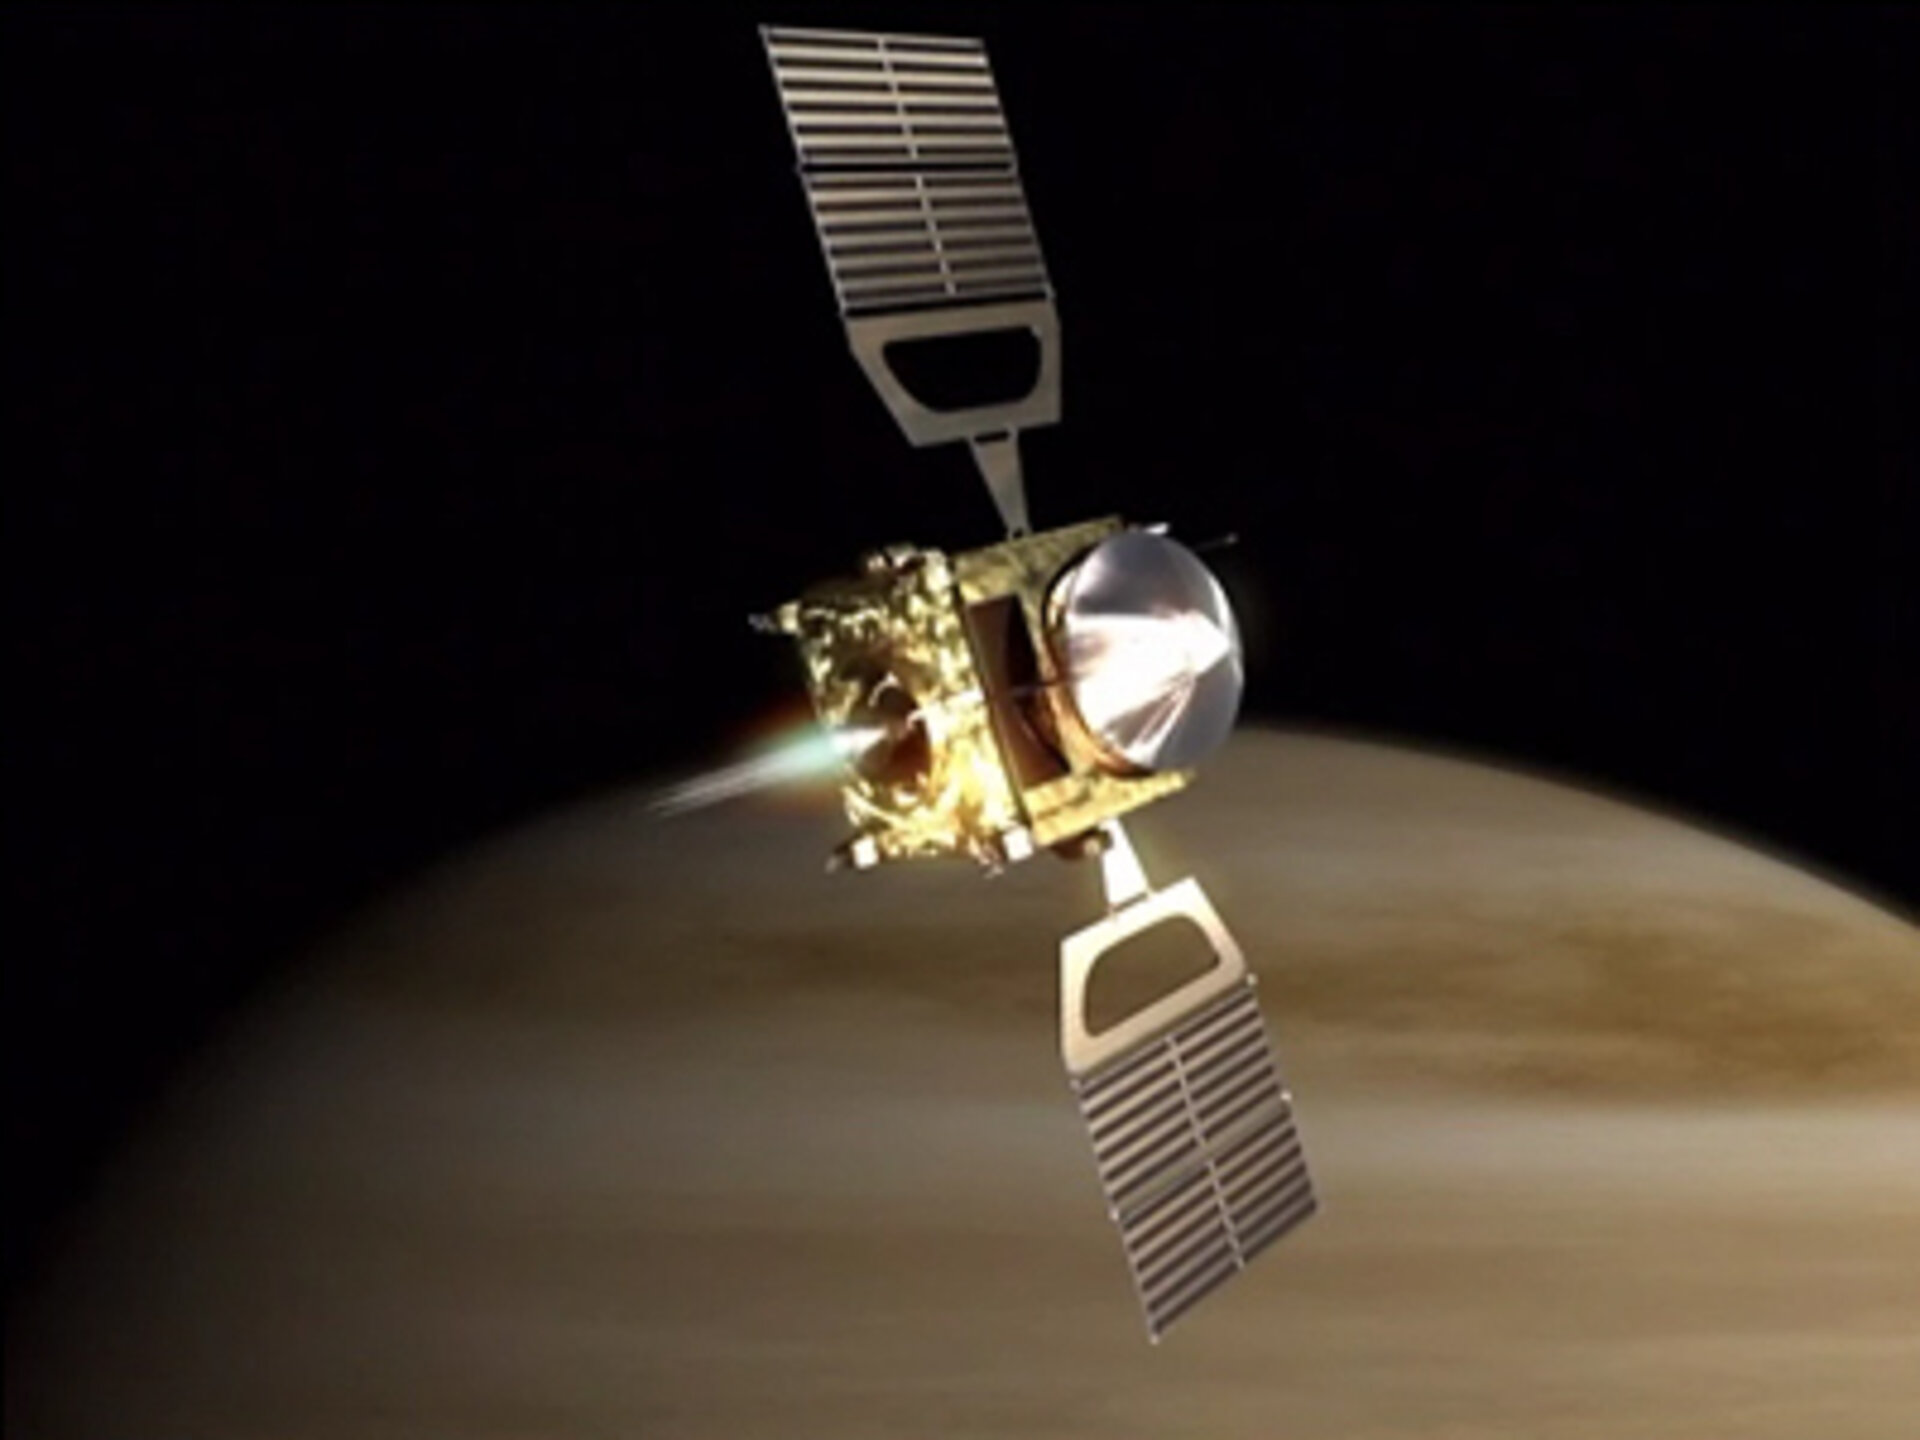 Venus Express orbit insertion